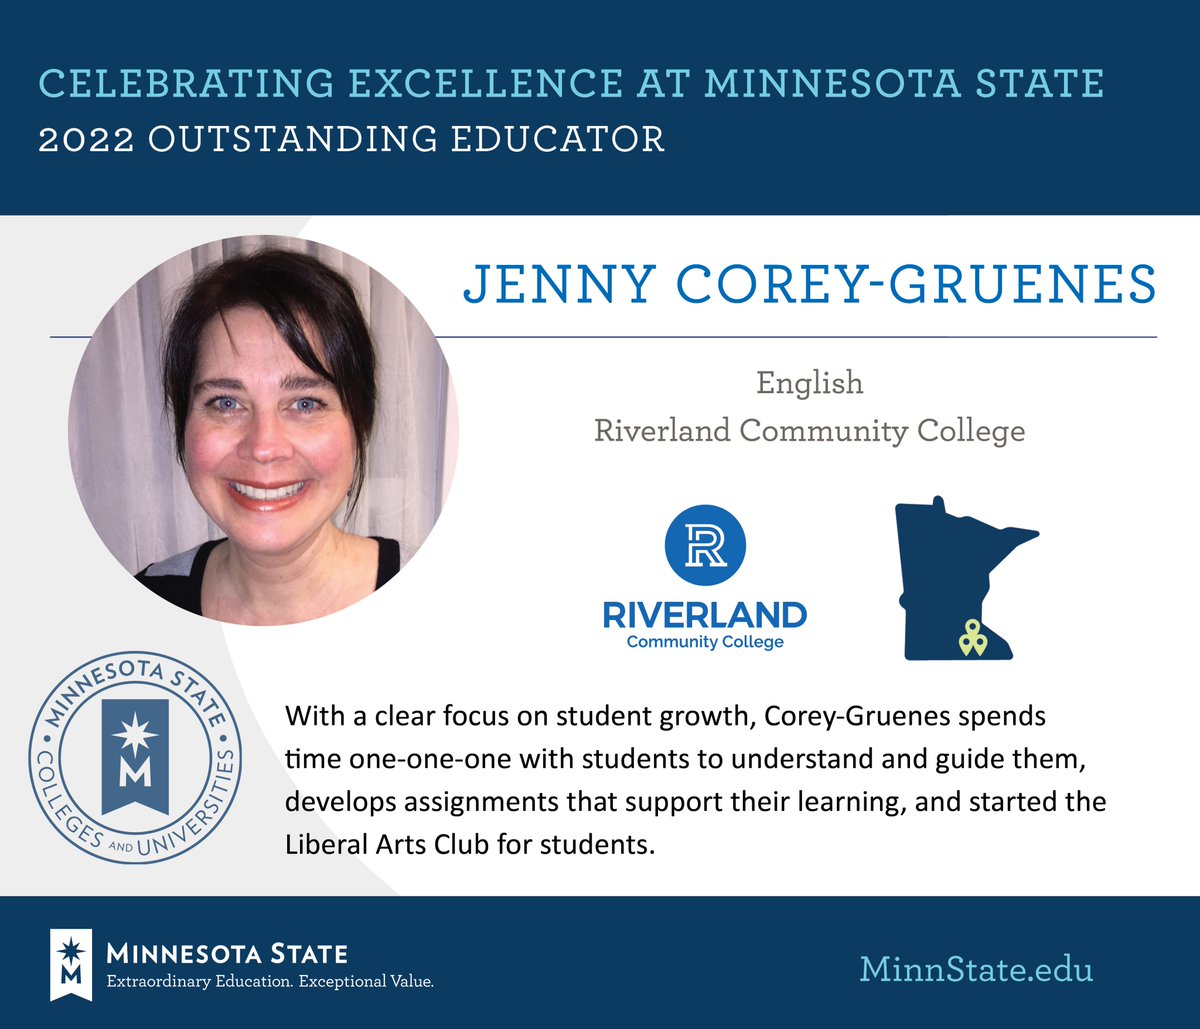 Congratulations Jenny Corey-Gruenes, @RiverlandCC 2022 Outstanding Educator! 

See more at https://t.co/7M4zUHS4ne #MinnStateBOTAwards https://t.co/K8gyxd6bxd